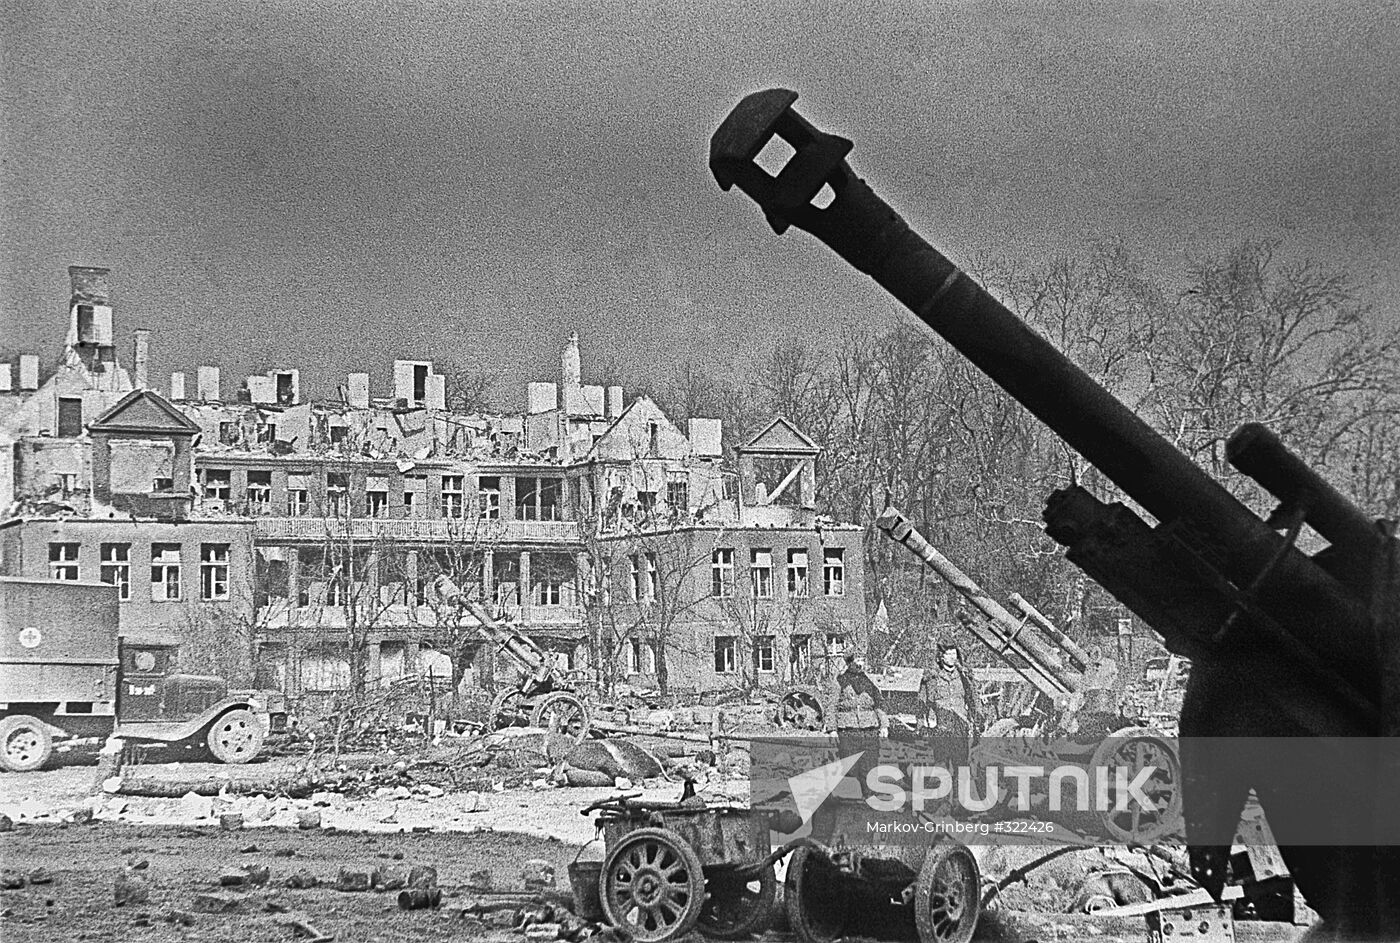 Königsberg in 1945